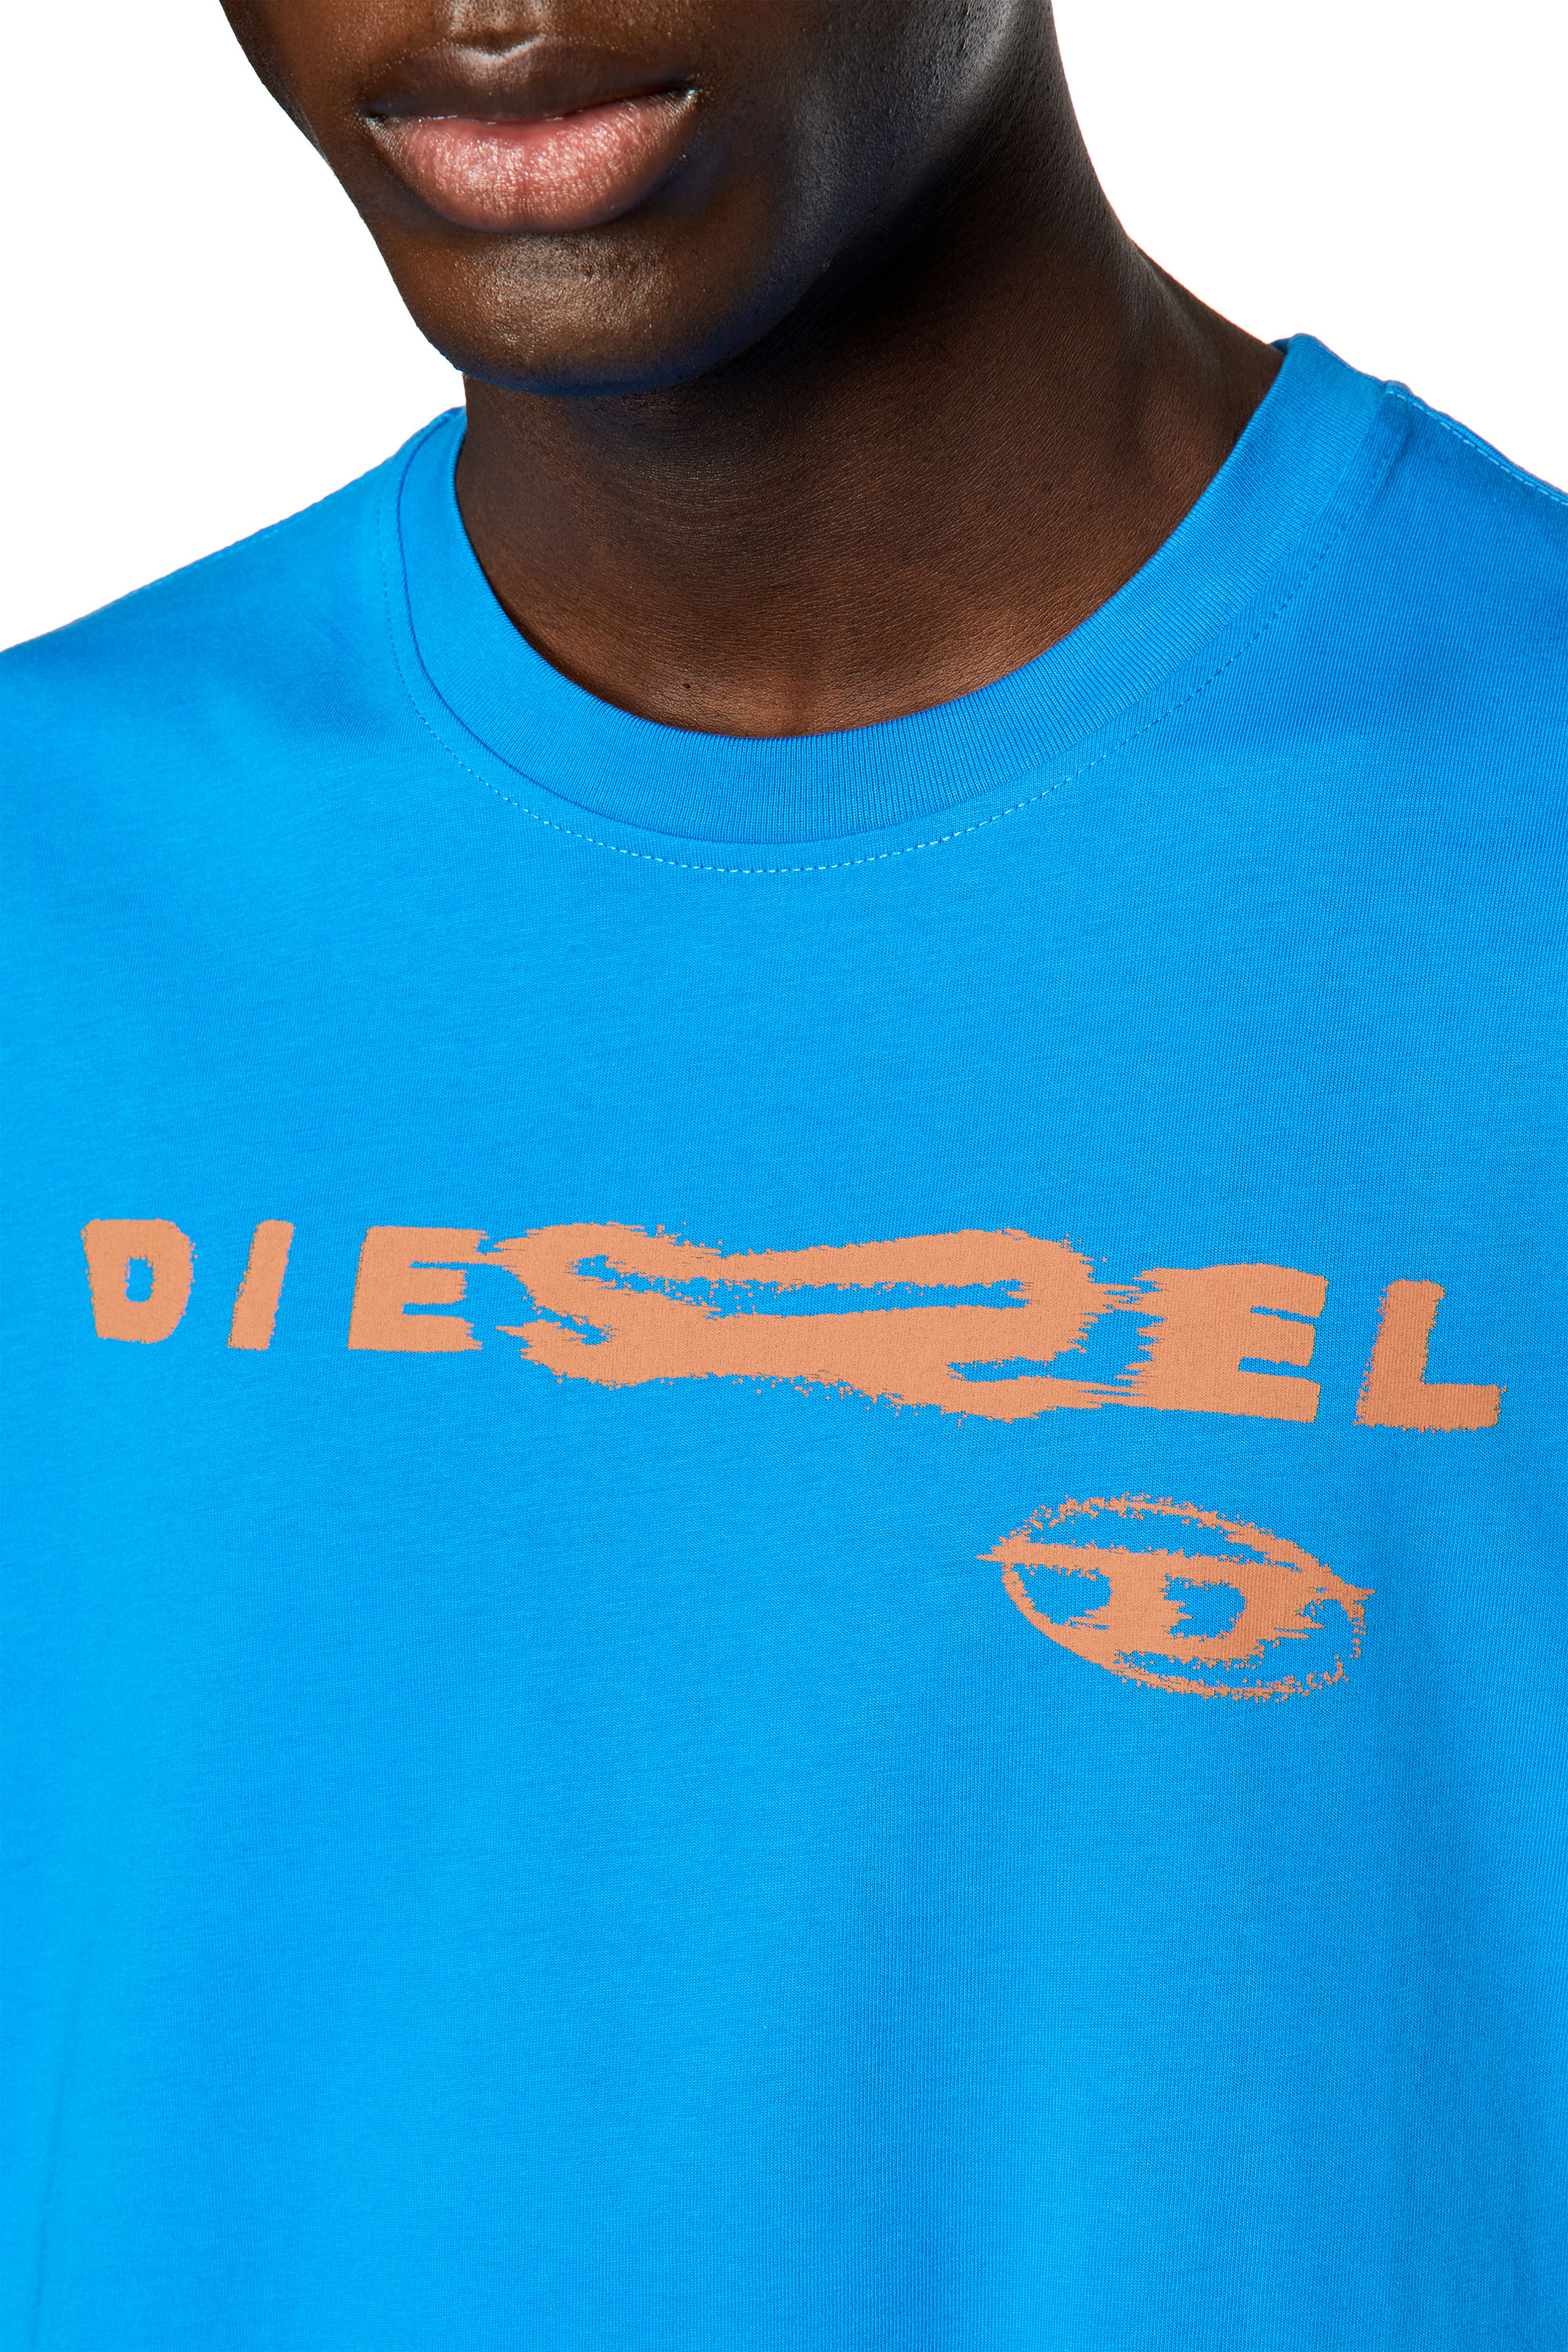 Diesel - T-JUST-G9, Blue - Image 4